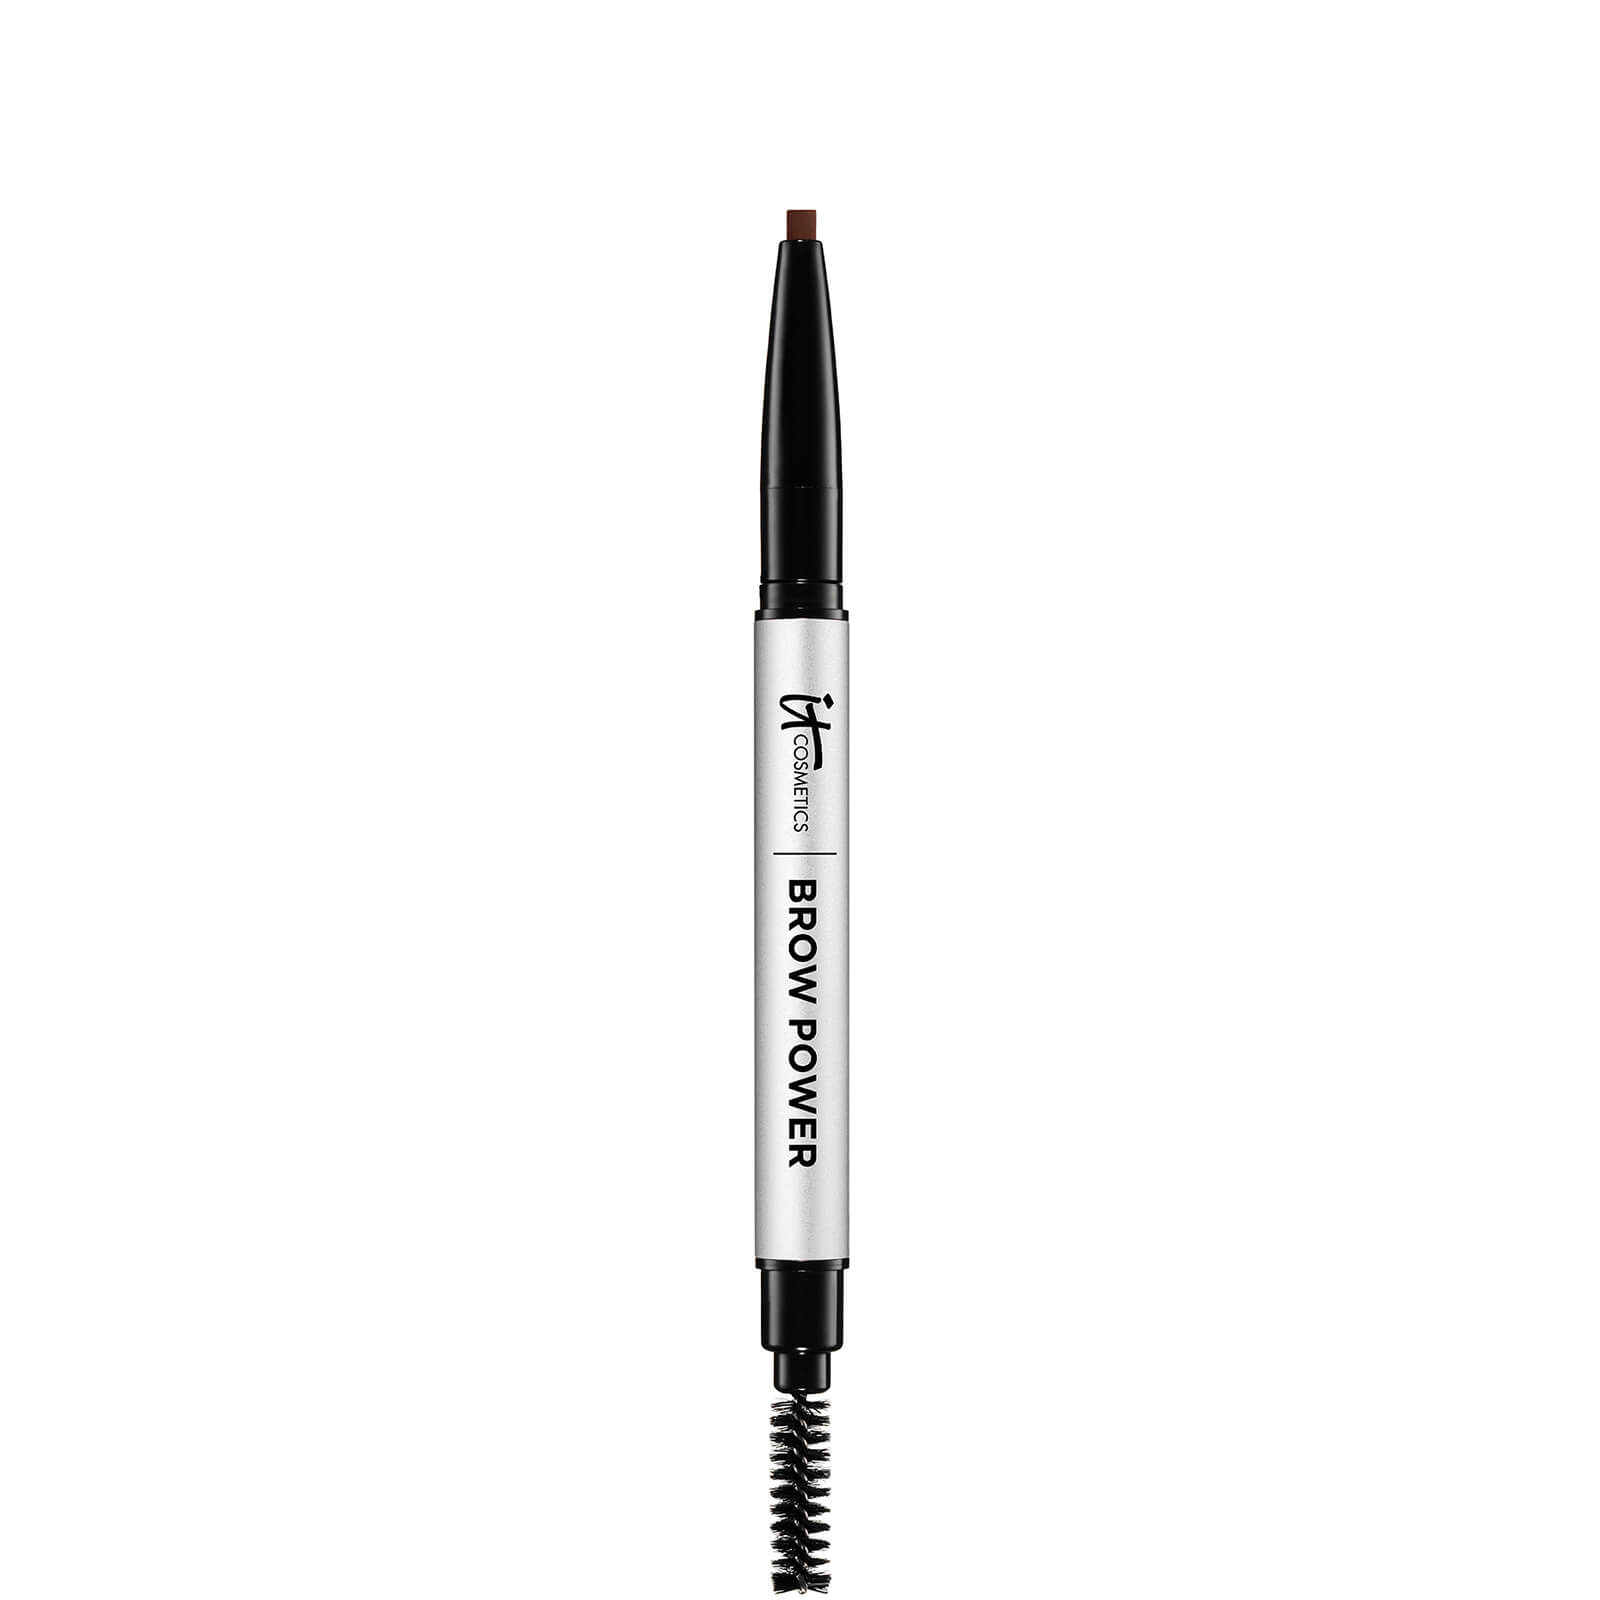 IT Cosmetics Brow Power Universal Eyebrow Pencil 0.16g (Various Shades) - Universal Auburn